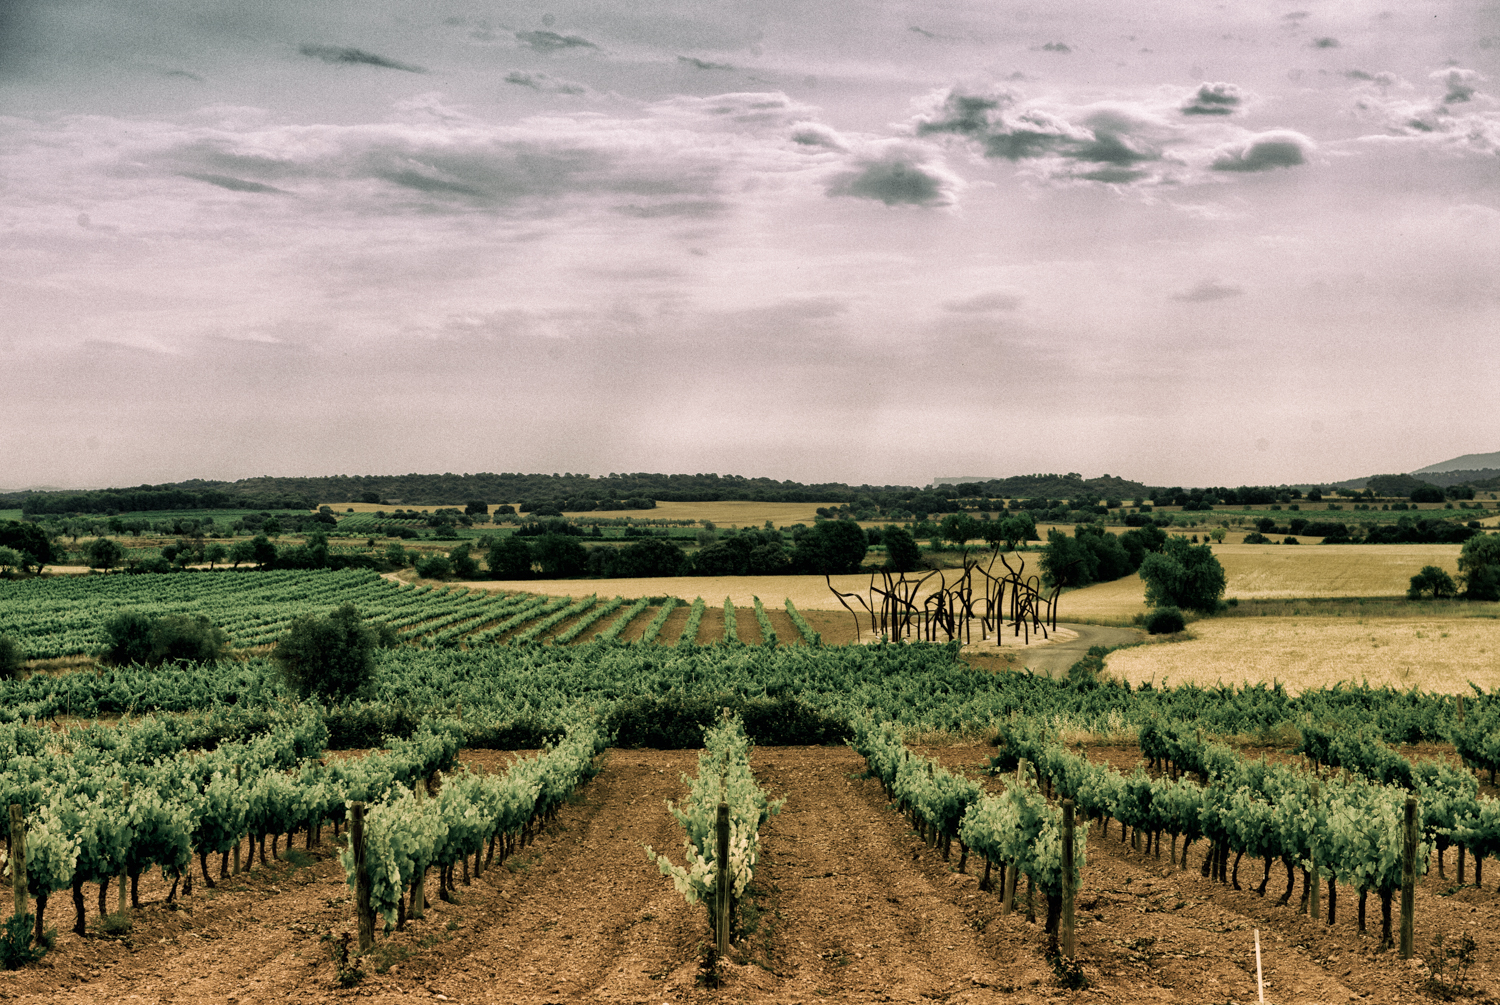 La Ruta del vino Somontano Aragona in Spagna enate